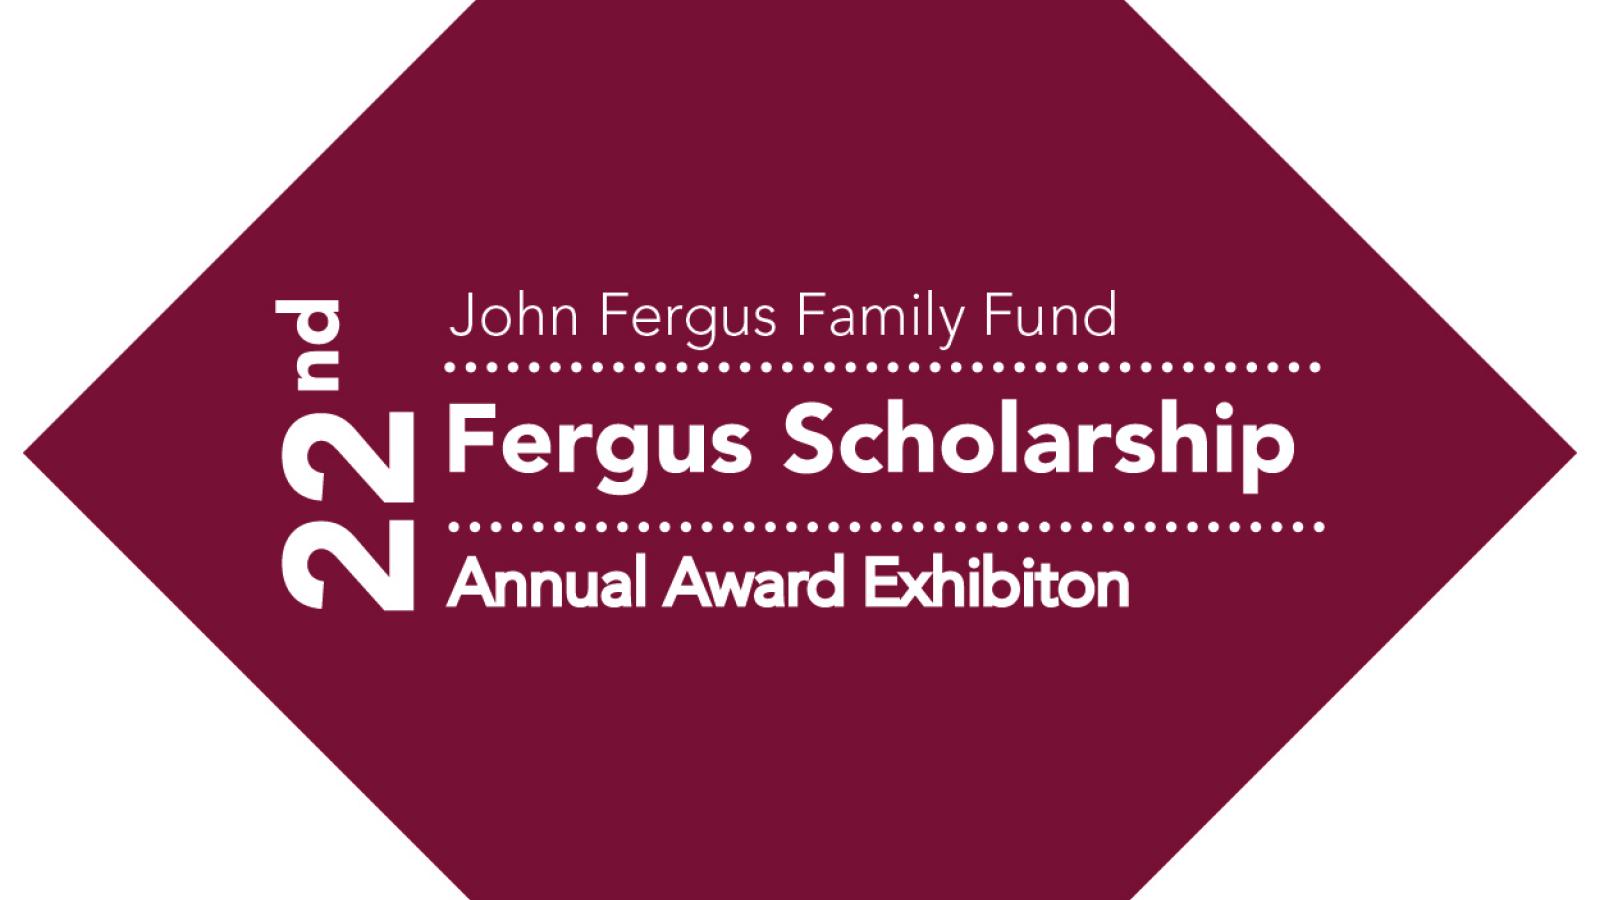 22nd Annual Fergus Scholarship Award Exhibition Logo